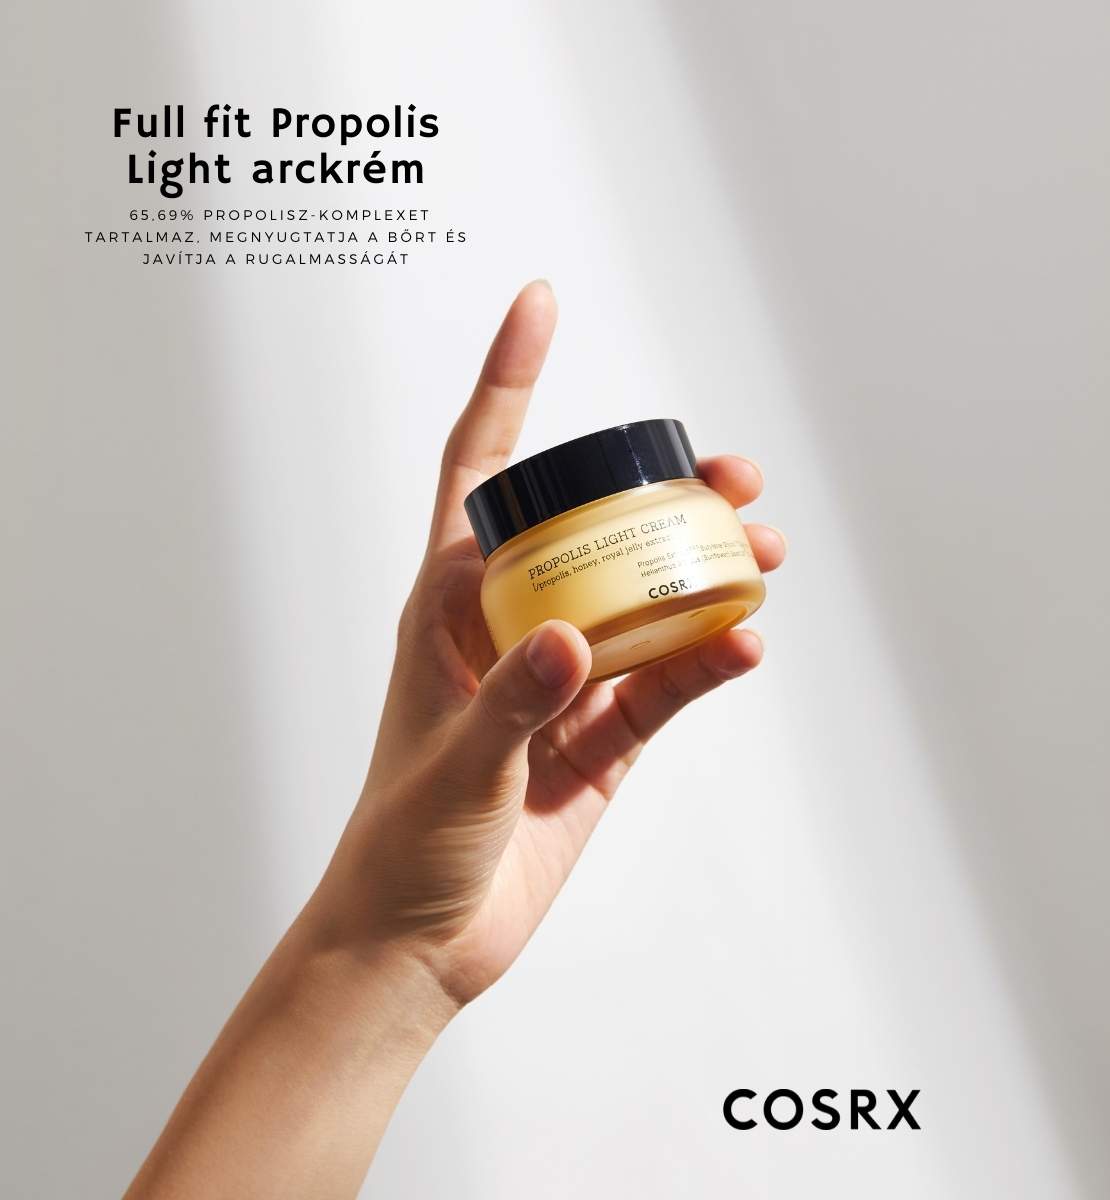 COSRX-full-fit-propolis-light-arckrem-leiras